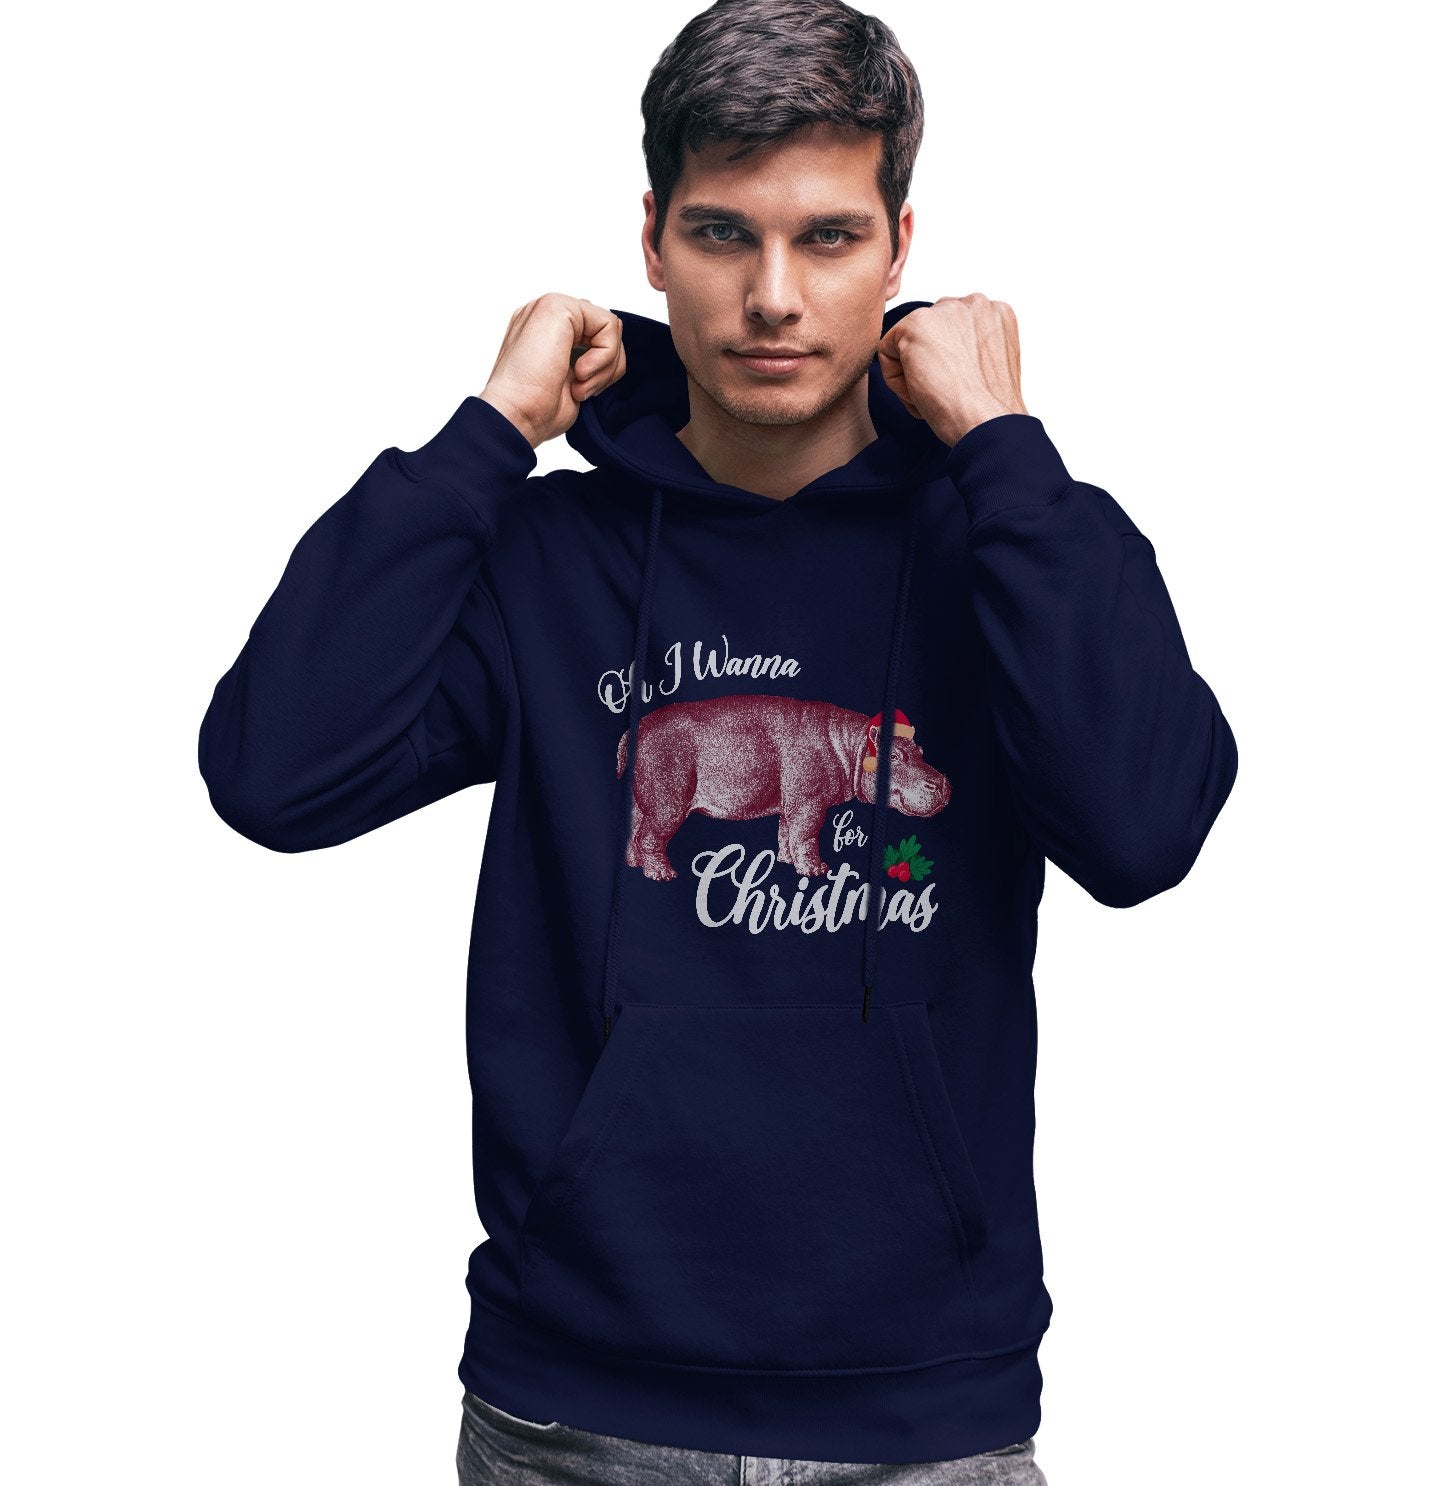 Animal Pride - Hippopotamus for Christmas - Adult Unisex Hoodie Sweatshirt